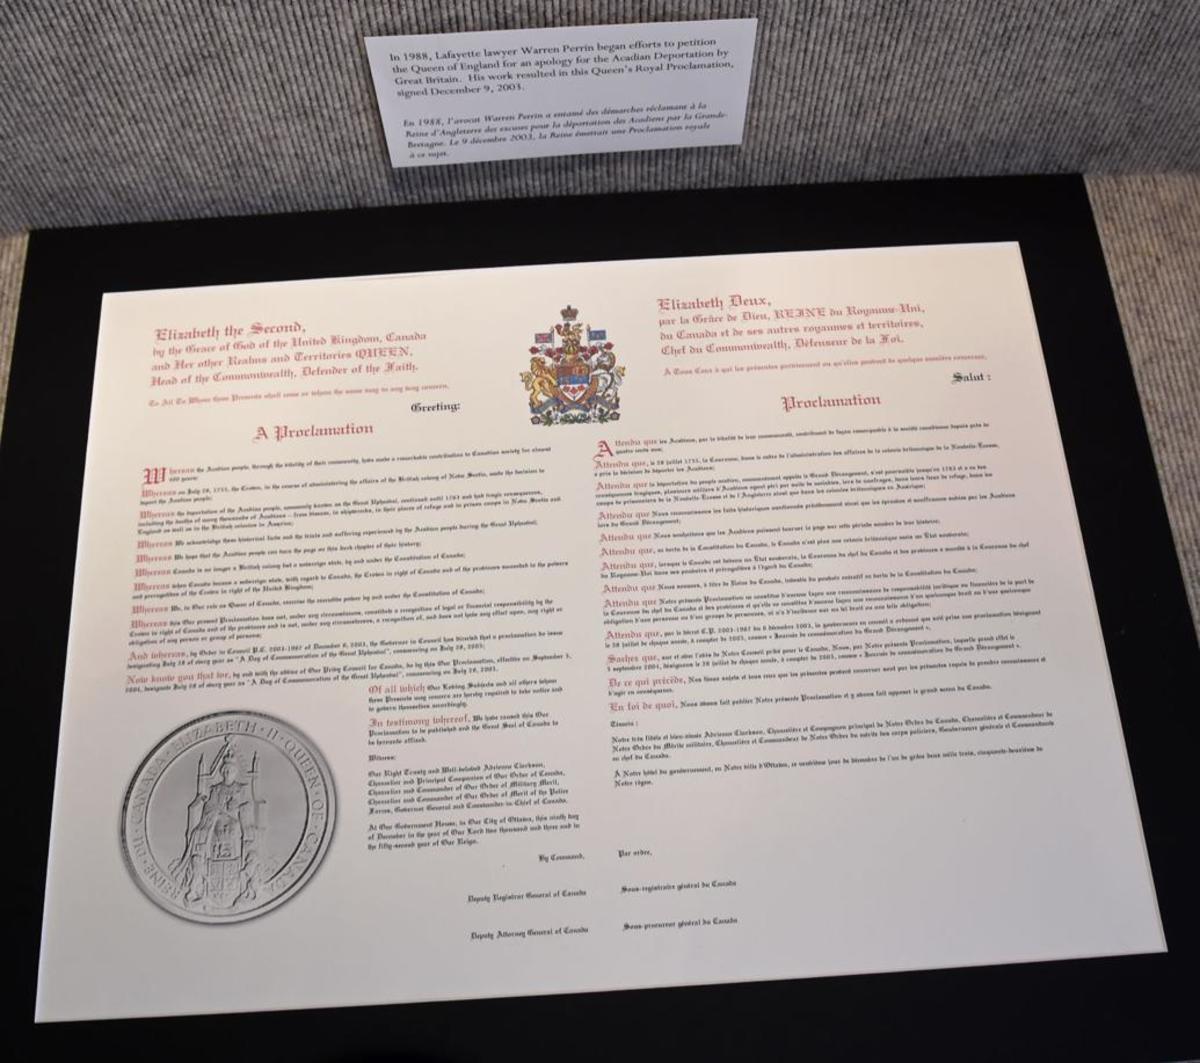 2003 Proclamation  by Queen Elizabeth II